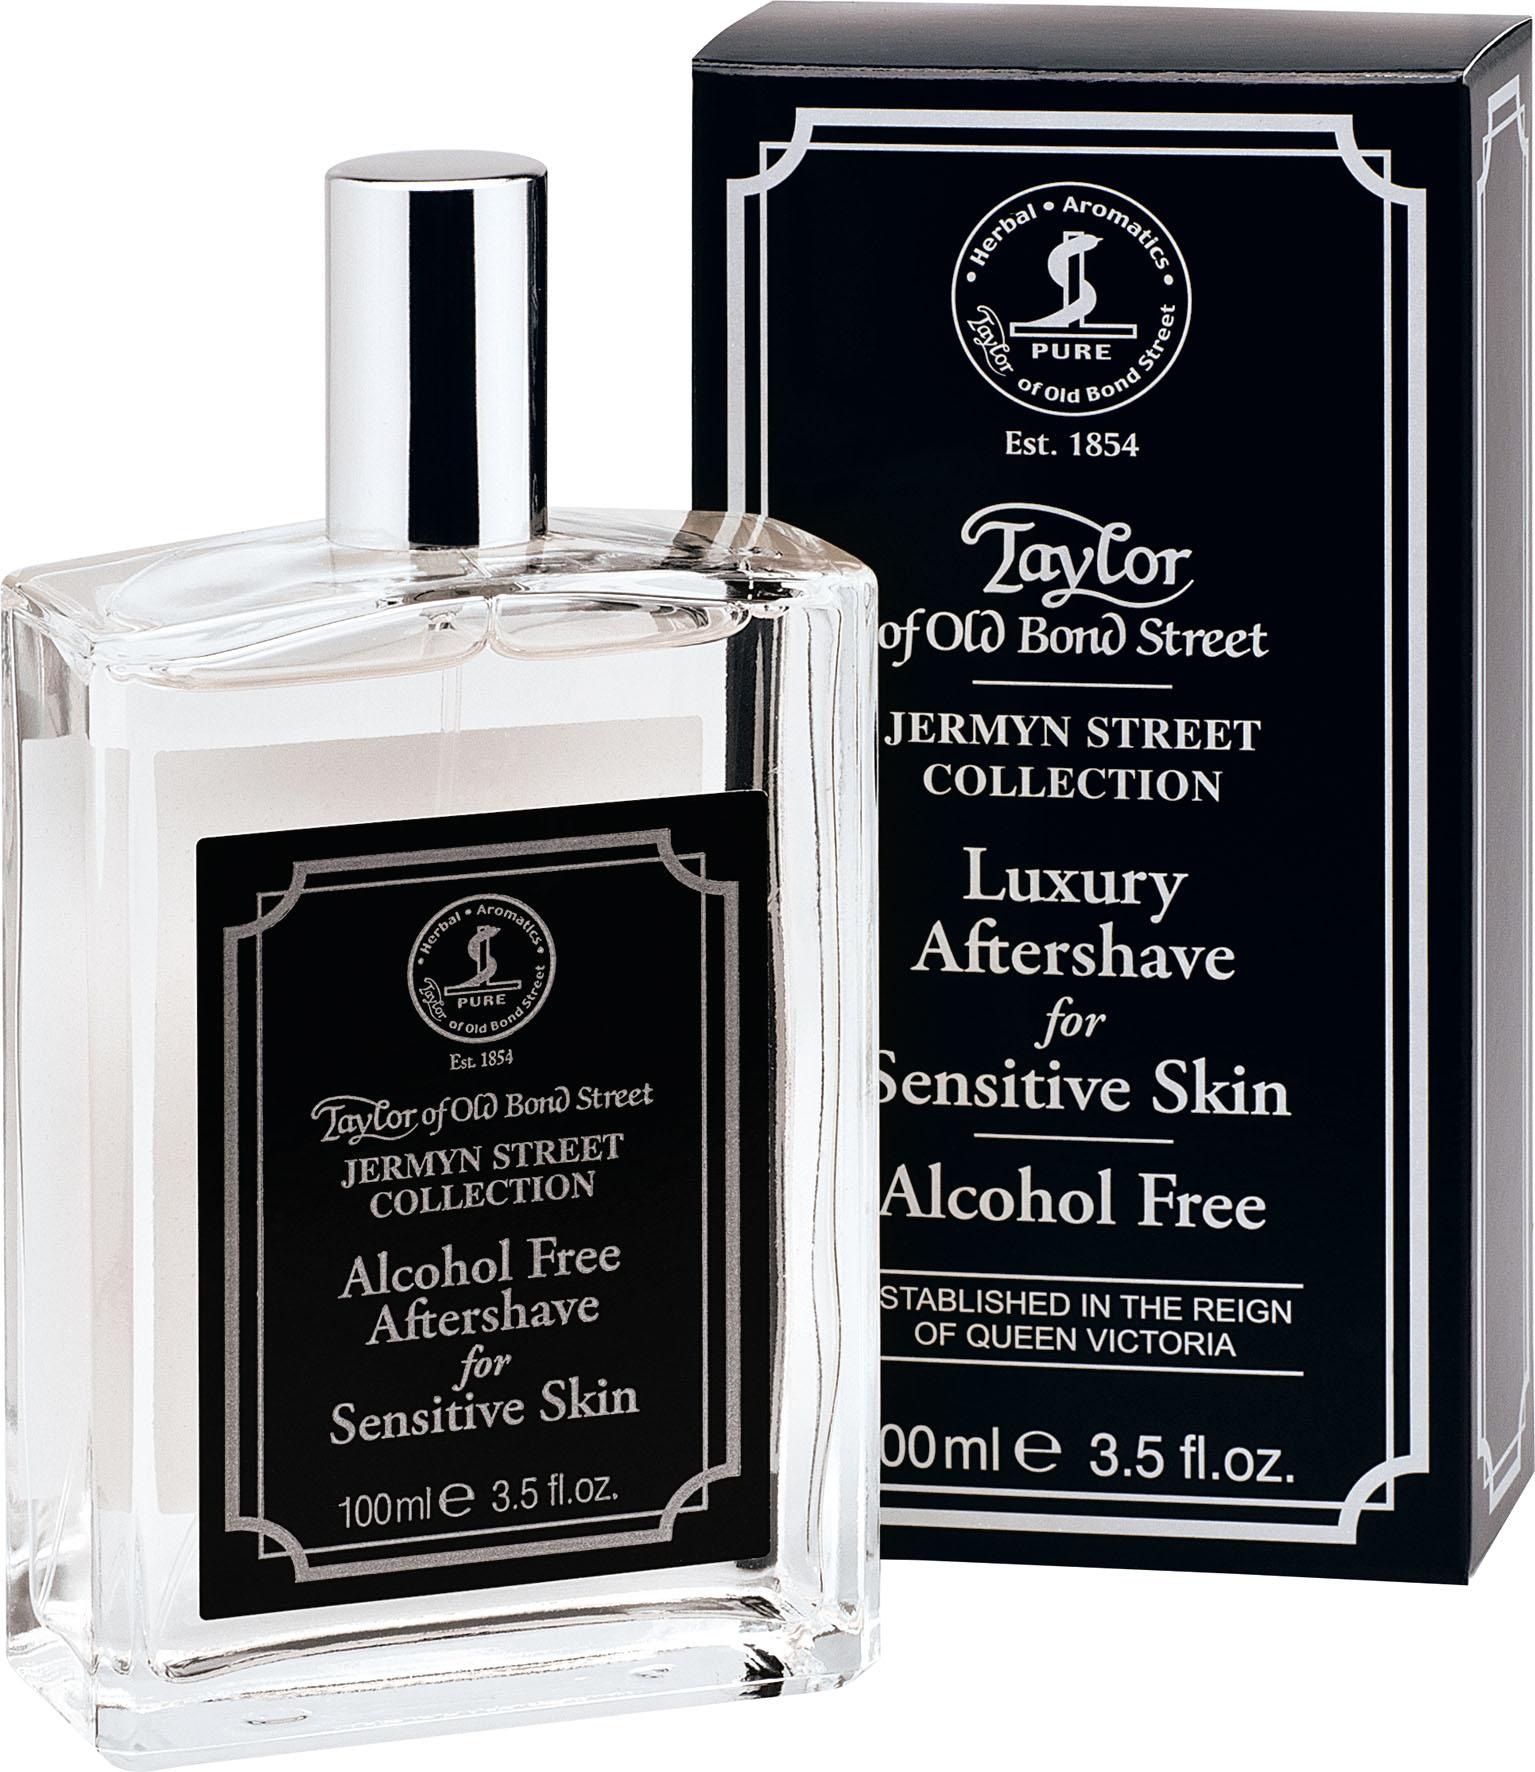 Luxury« of Bond Sensitive Street Skin After-Shave »Jermyn Taylor Old Street